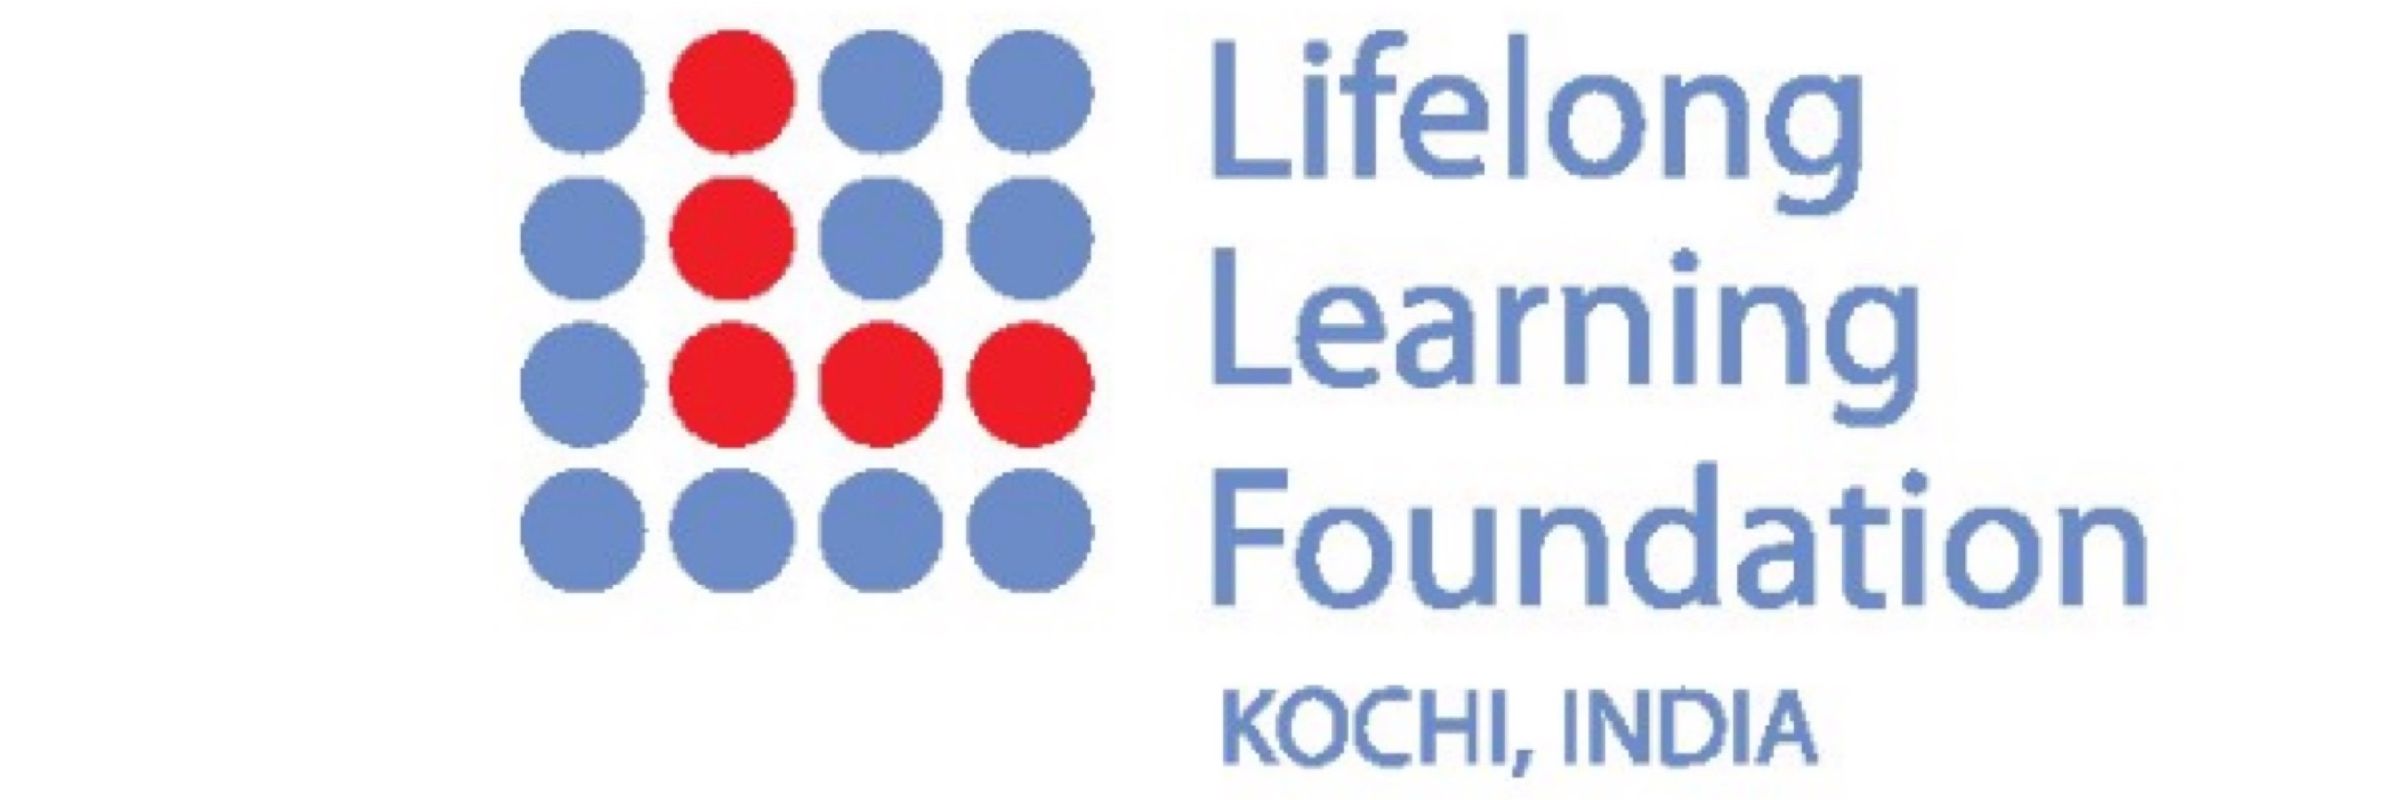 Lifelong Learning Foundation